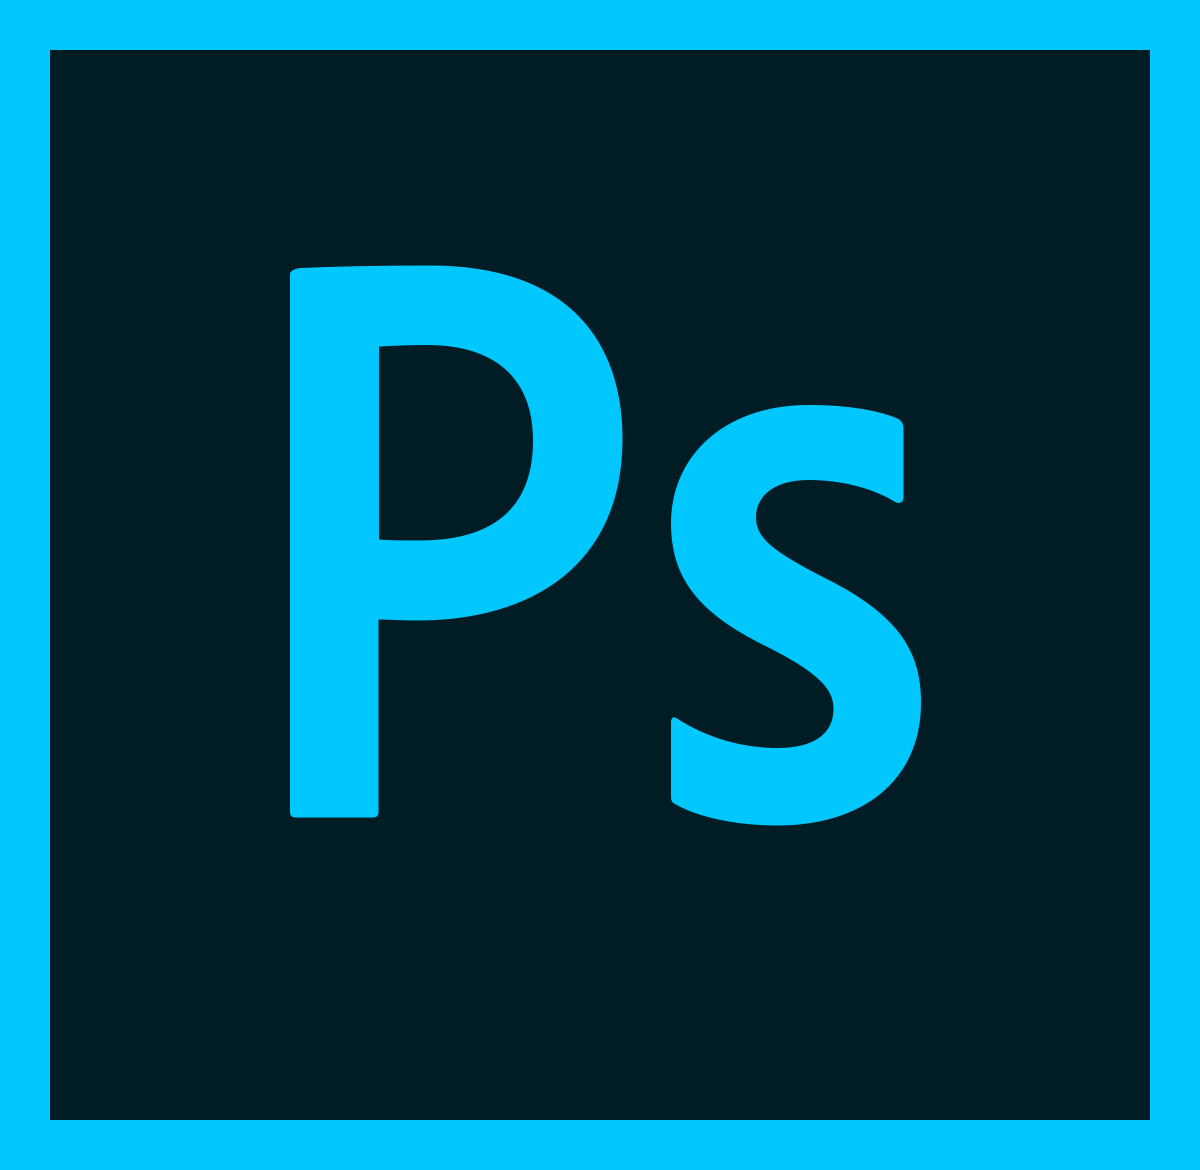 Red Abstract Windows 1.0 Logo - Adobe Photoshop